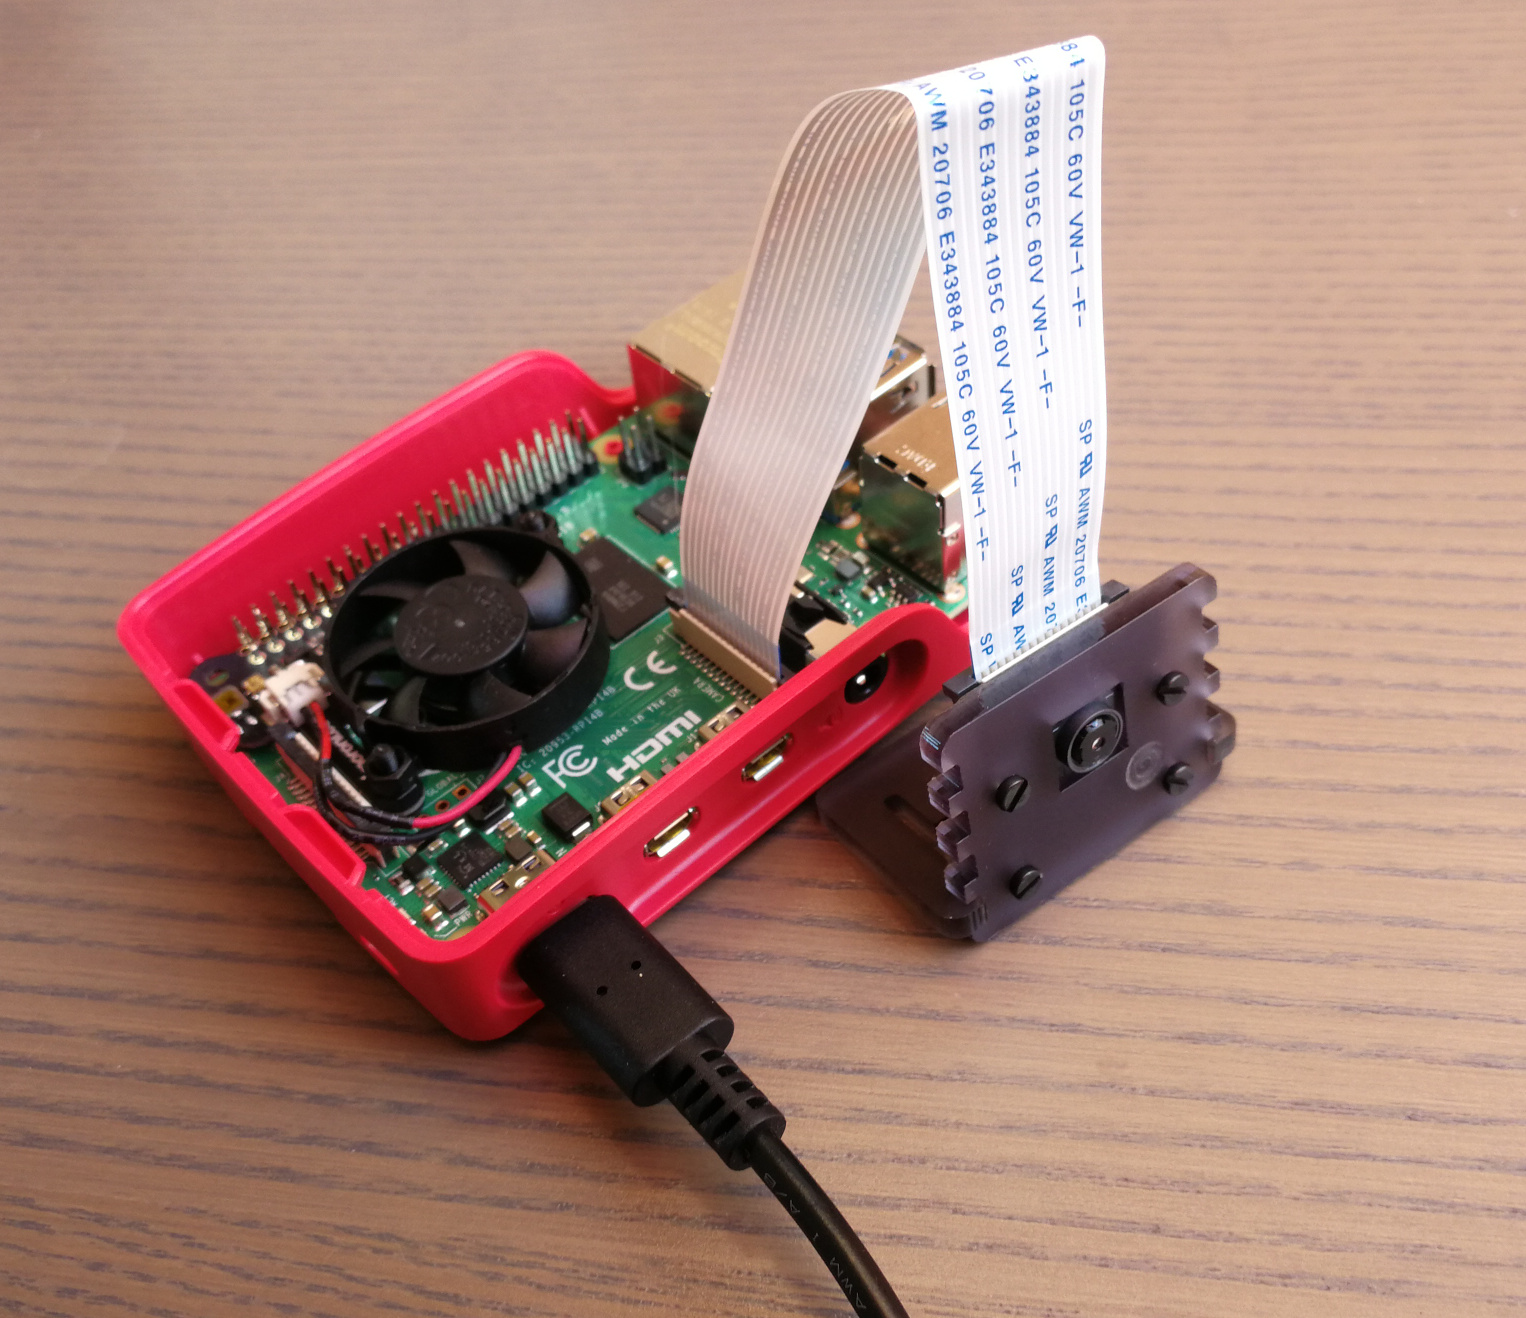 Raspberry 4 with attached Pi camera in barebone housing.